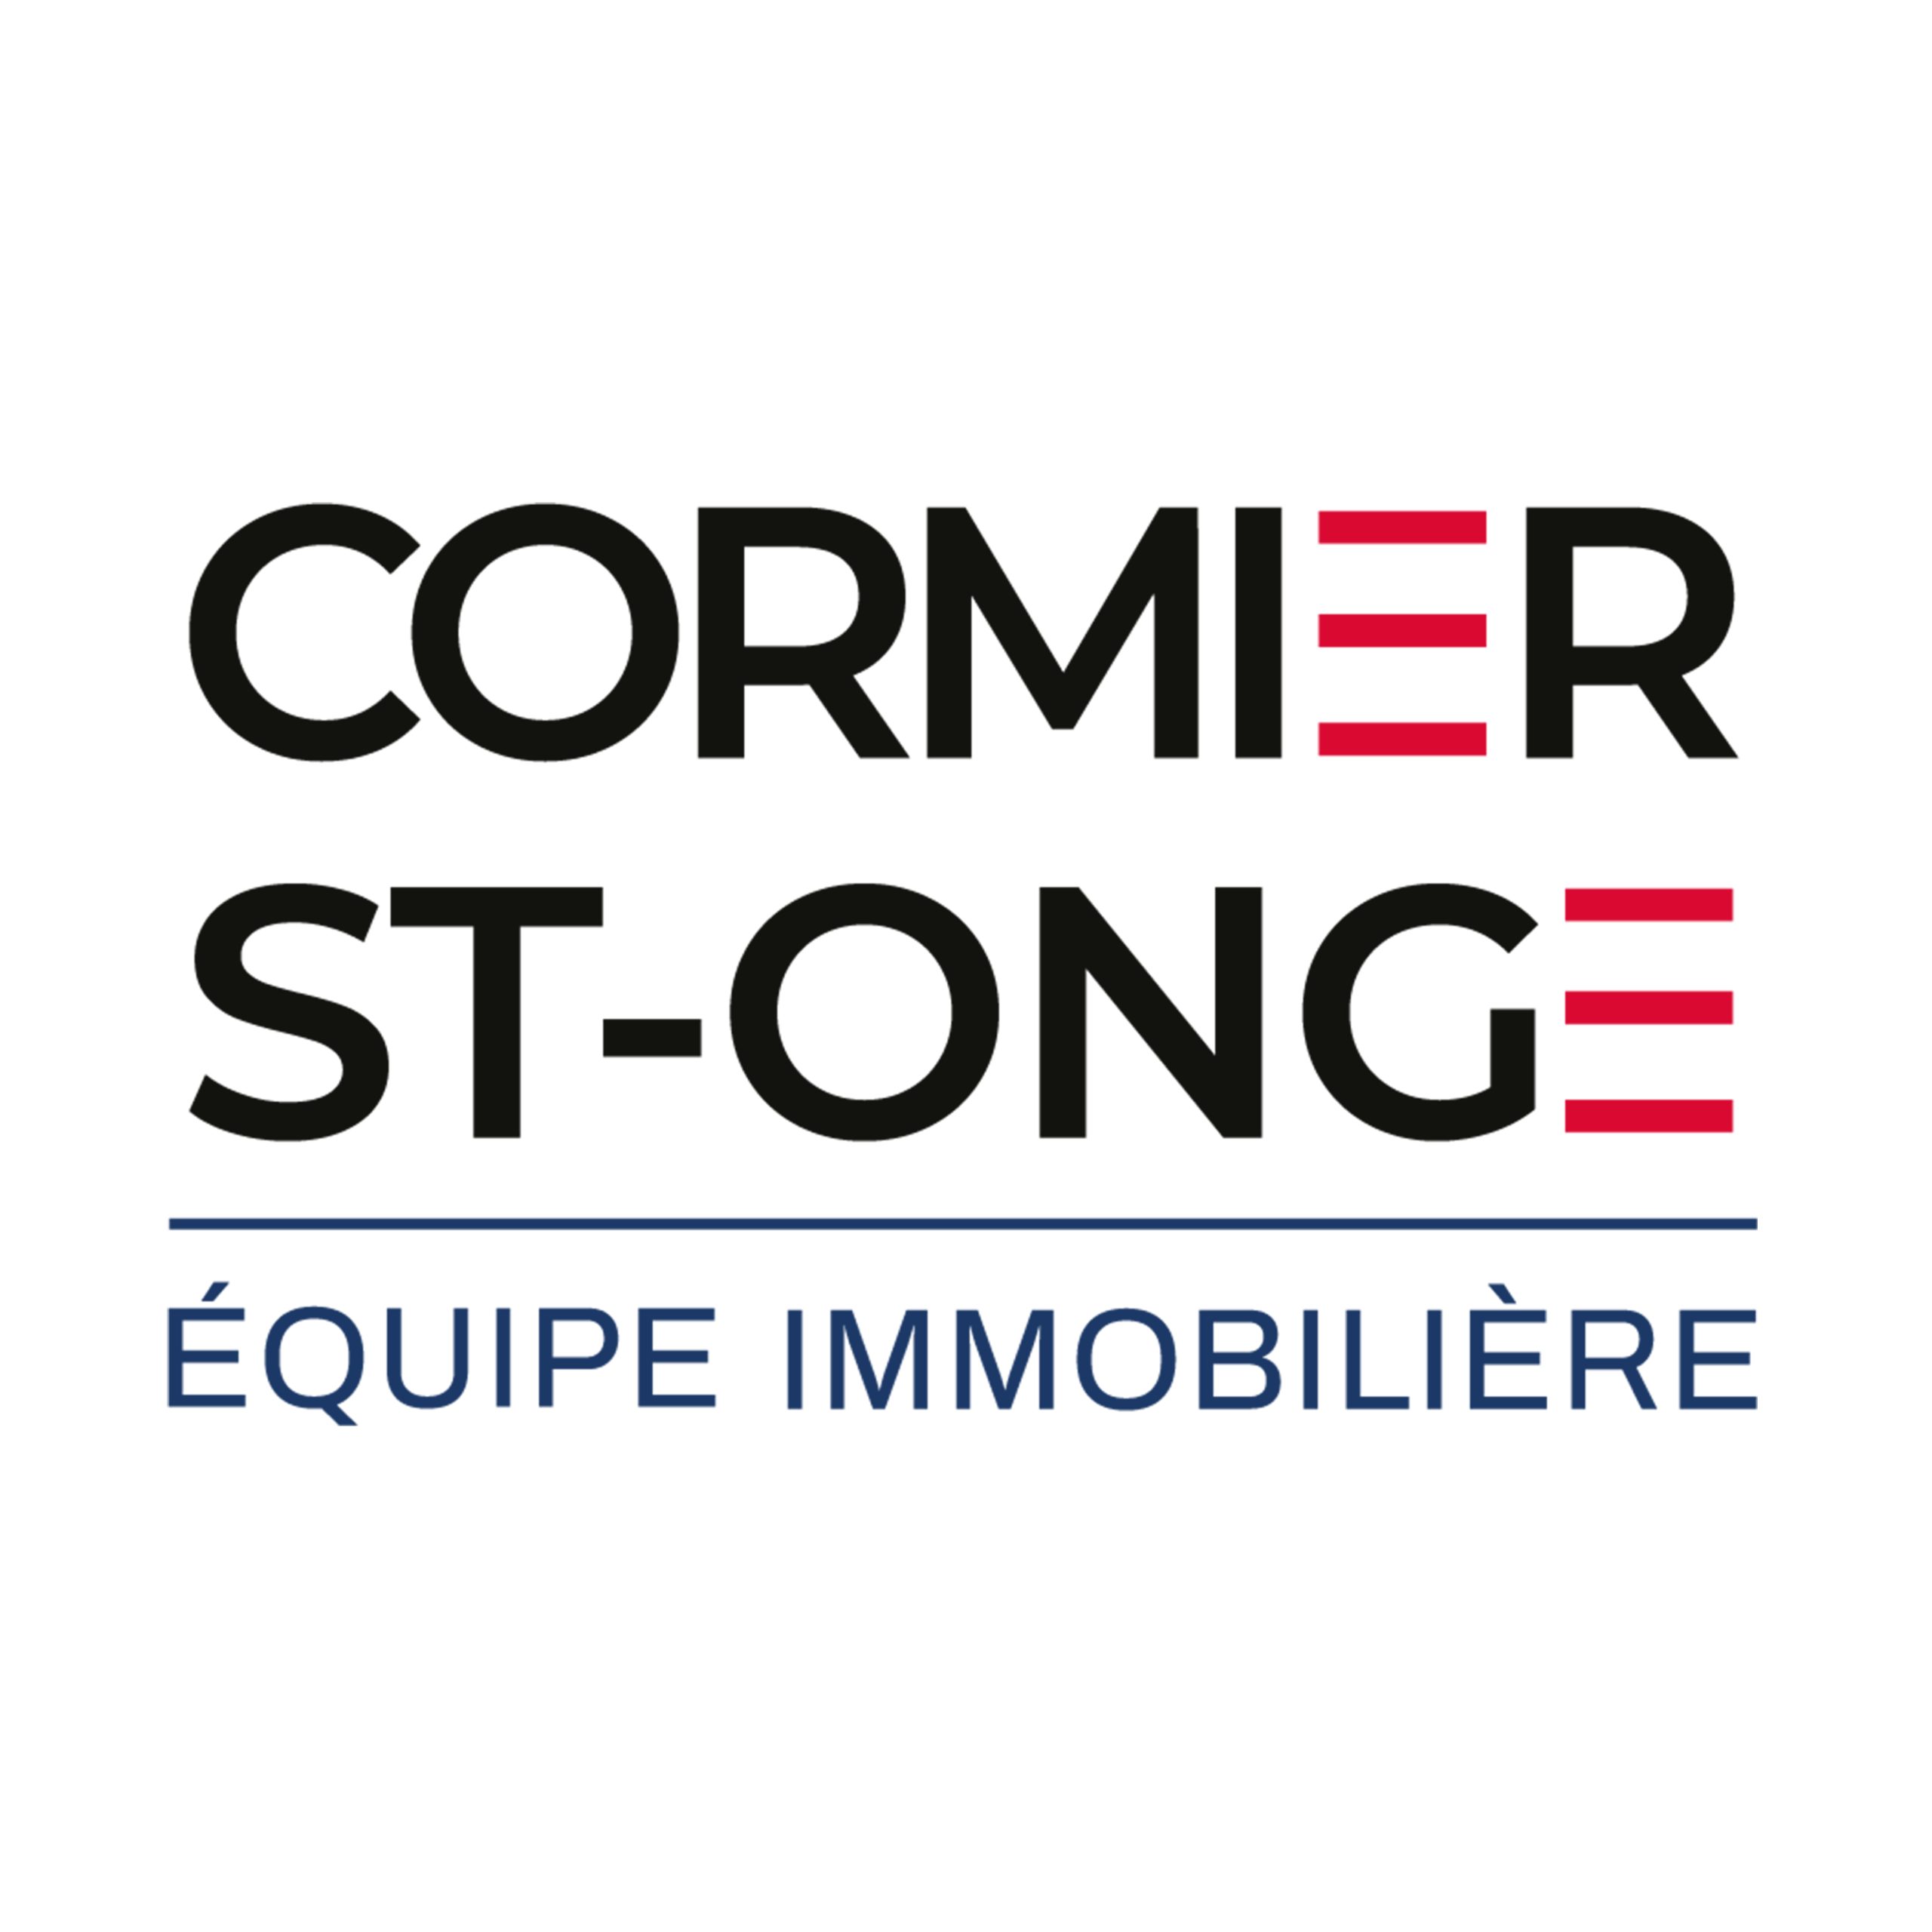 Cormier st-onge remax Victoriaville logo